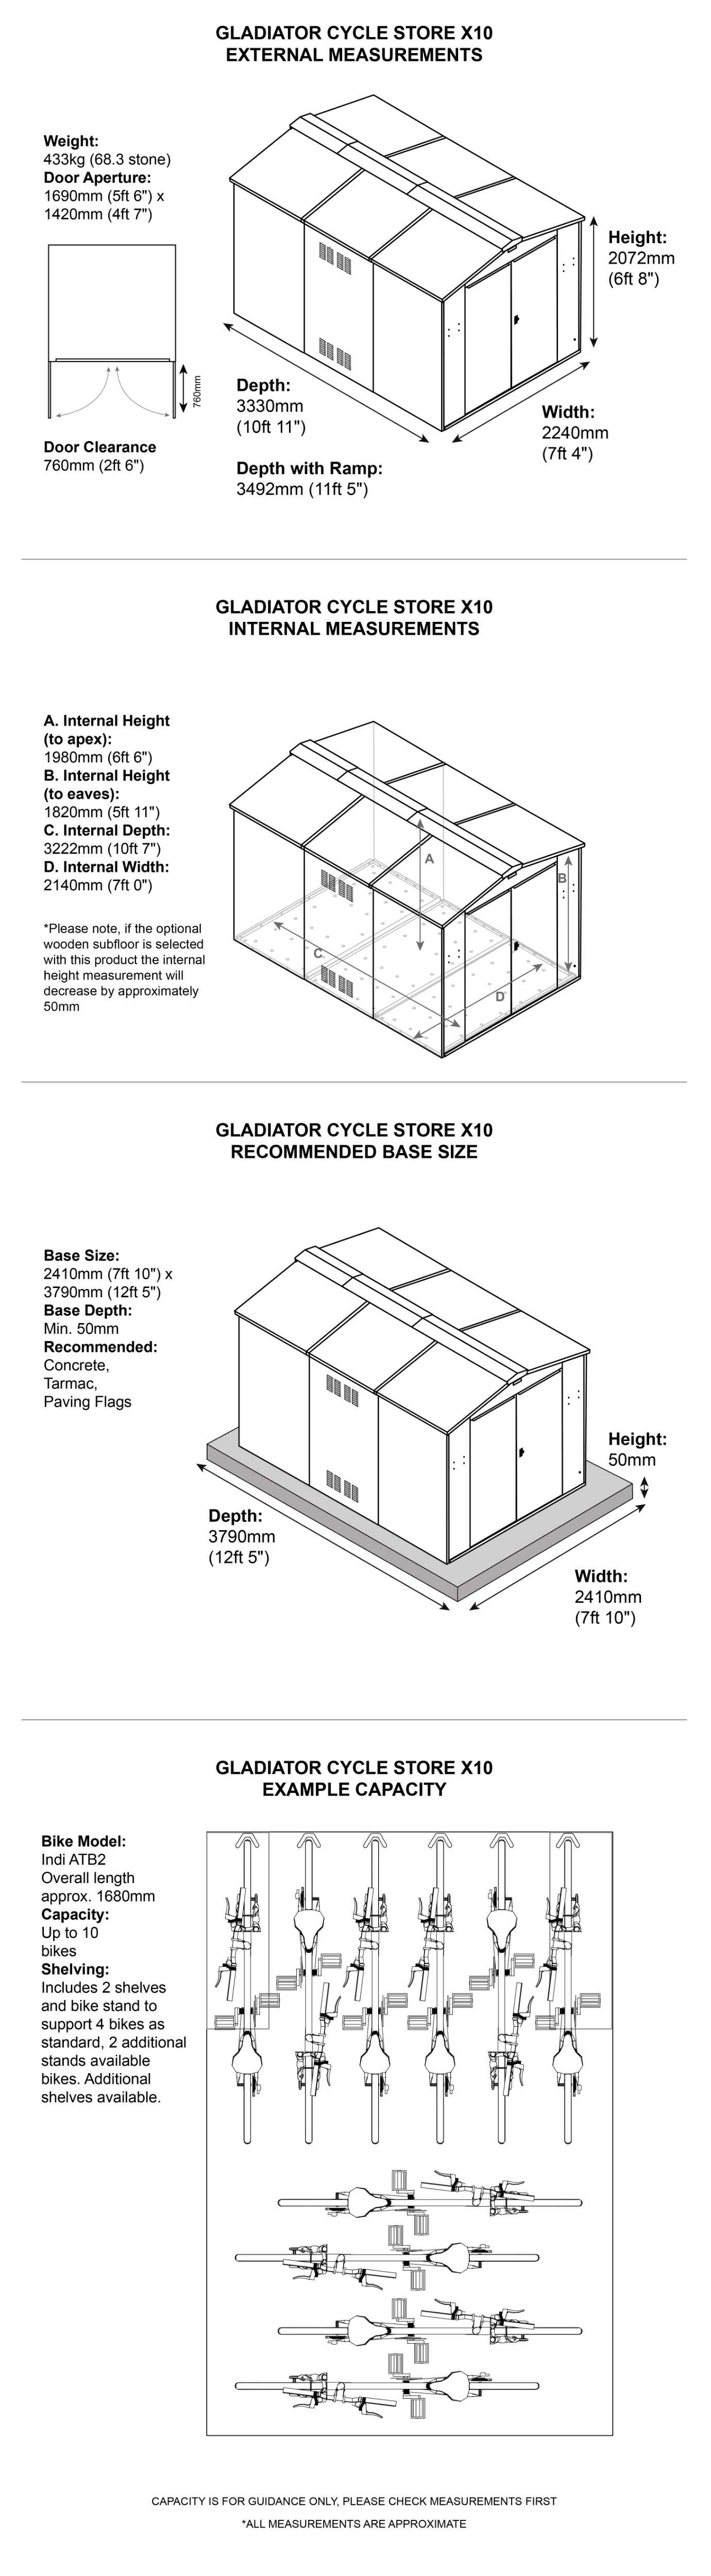 Gladiator cycle storage dimensions